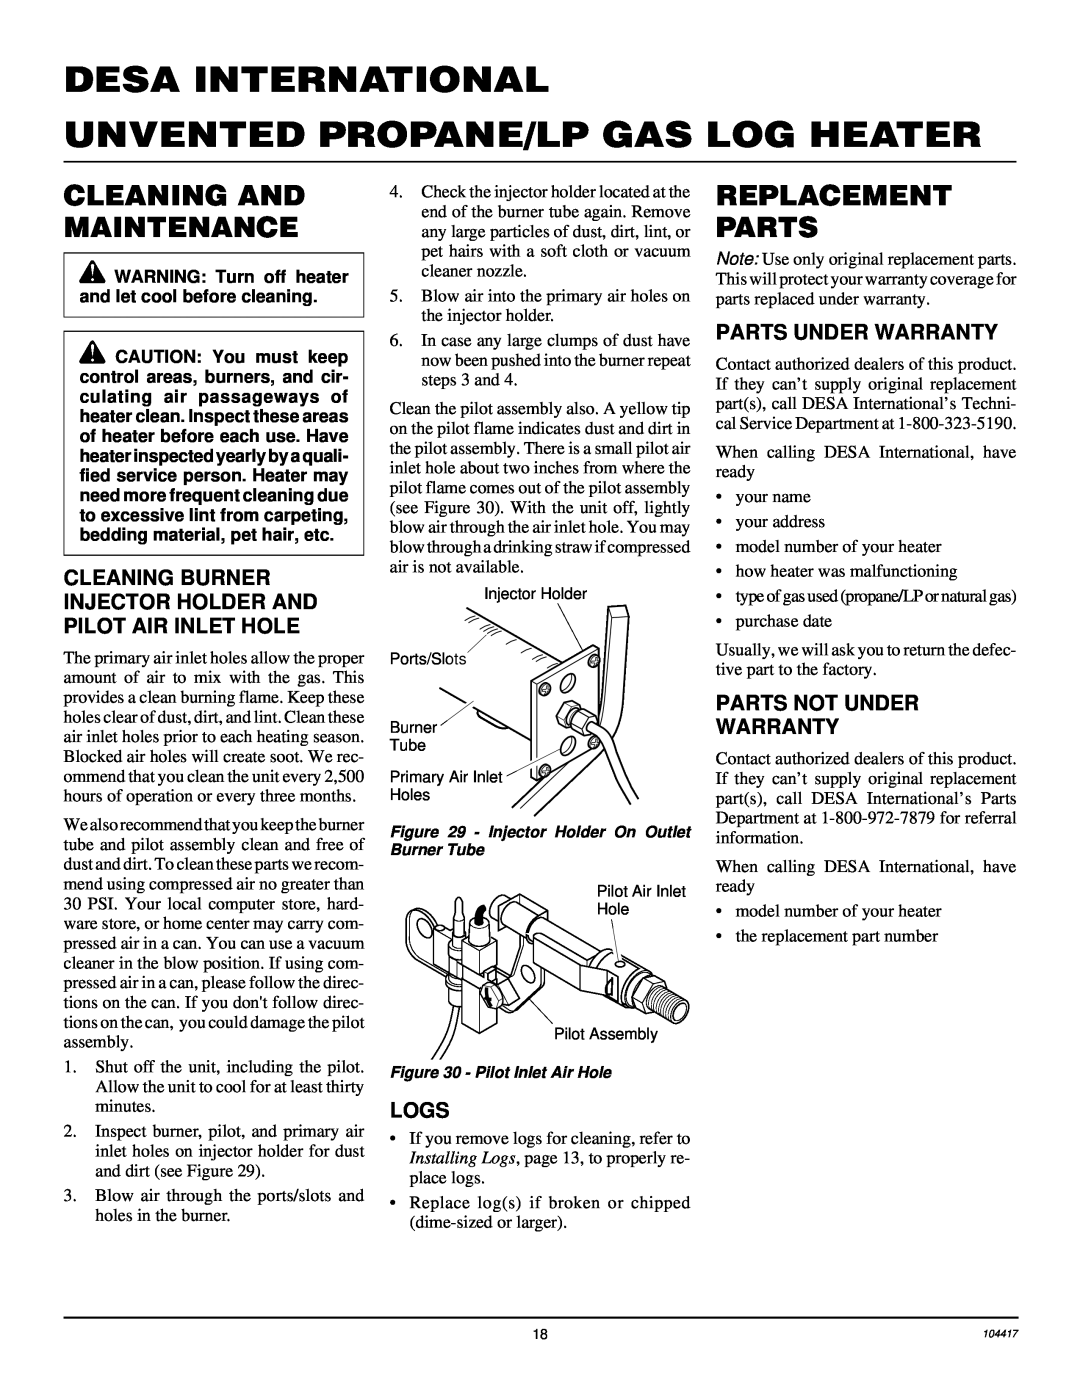 Desa VS30PRA, CFS18PRA Cleaning And Maintenance, Replacement Parts, Logs, Parts Under Warranty, Parts Not Under Warranty 